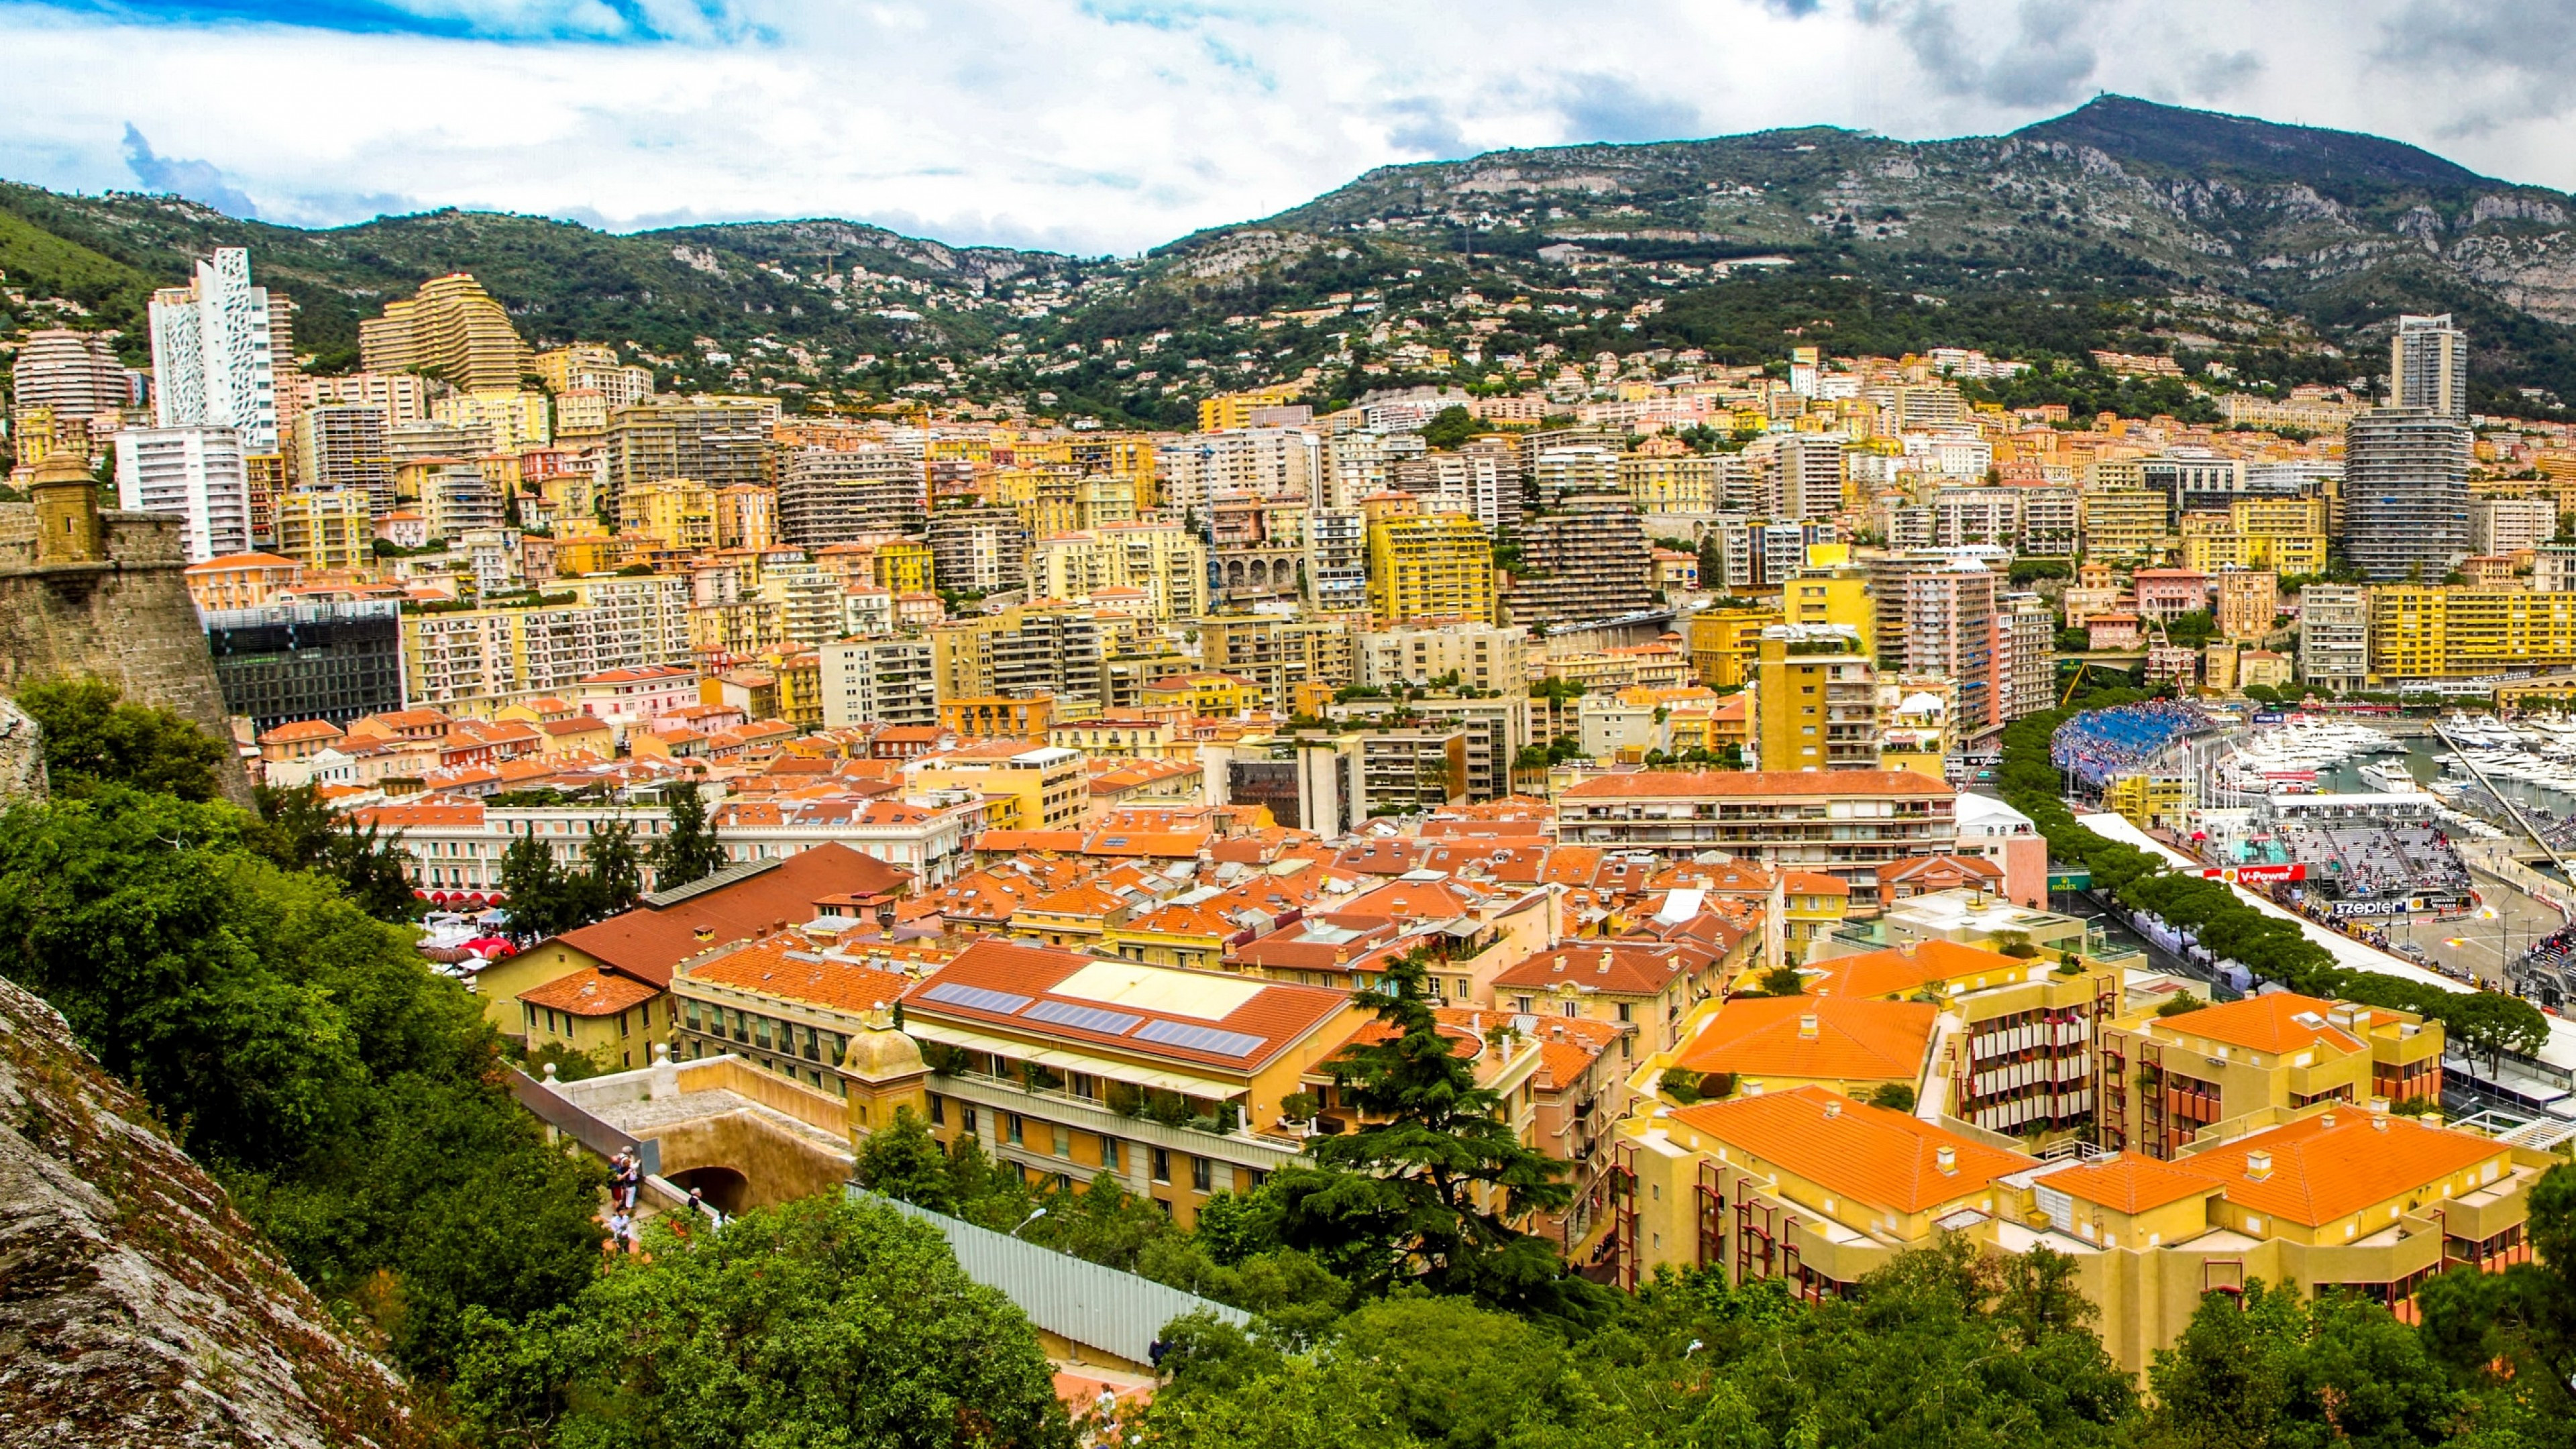 Monaco houses, Beach cityscape wallpapers, UHD TV, Travels, 3840x2160 4K Desktop